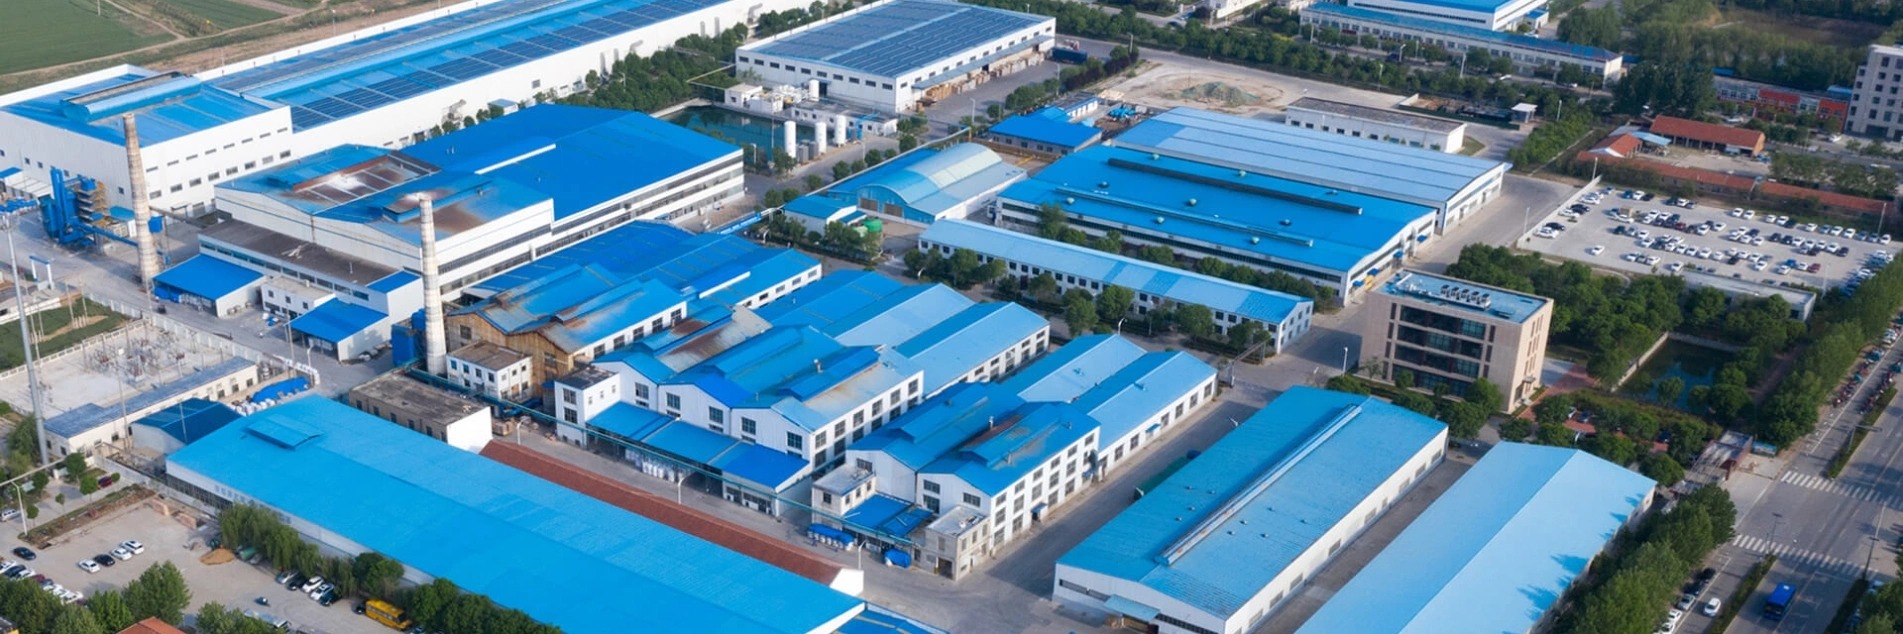 Shandong Linuo 기술 유리 Co., Ltd.